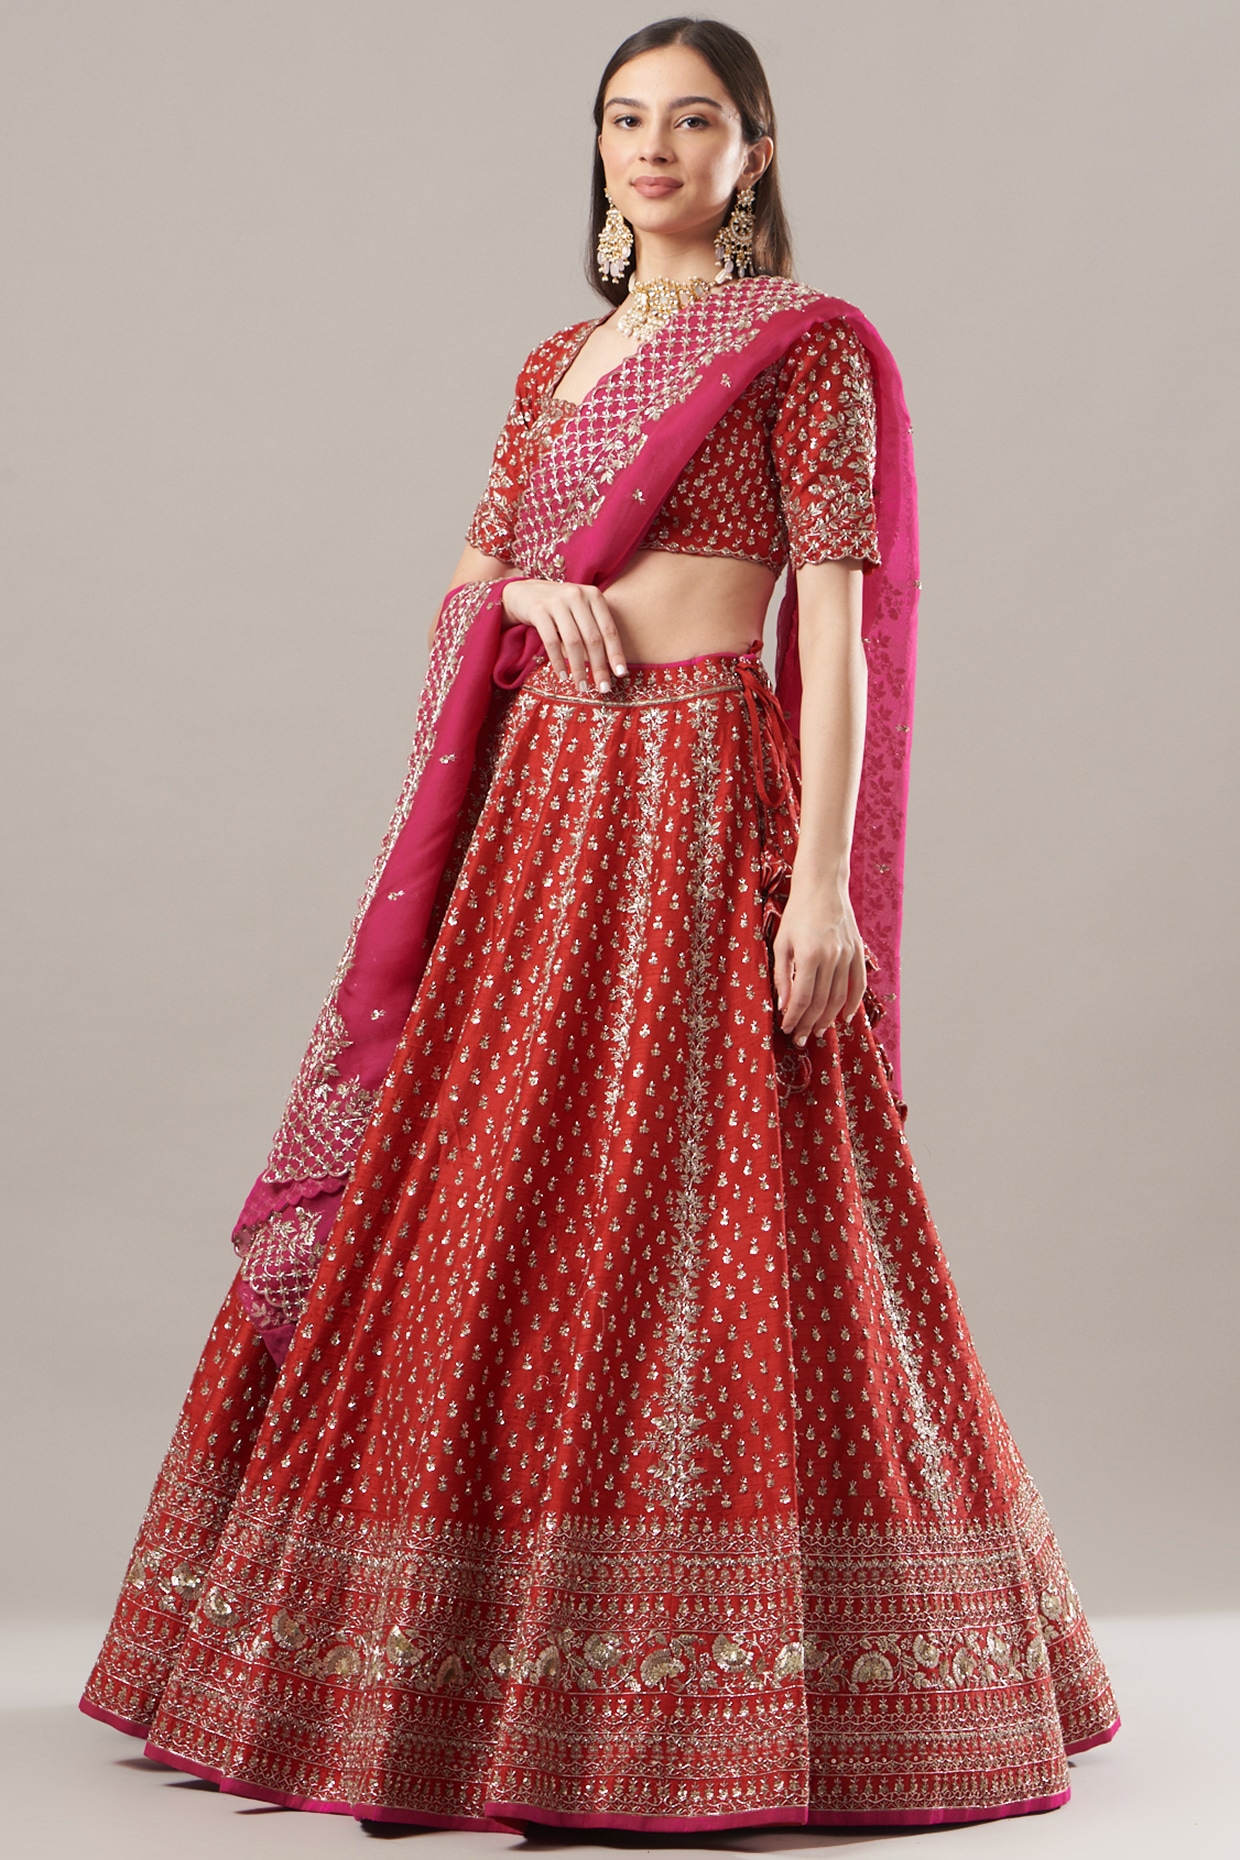 Long Dresses made out of old and Damaged Sarees #LongDresses | Long gown  dress, Designer anarkali dresses, Indian gowns